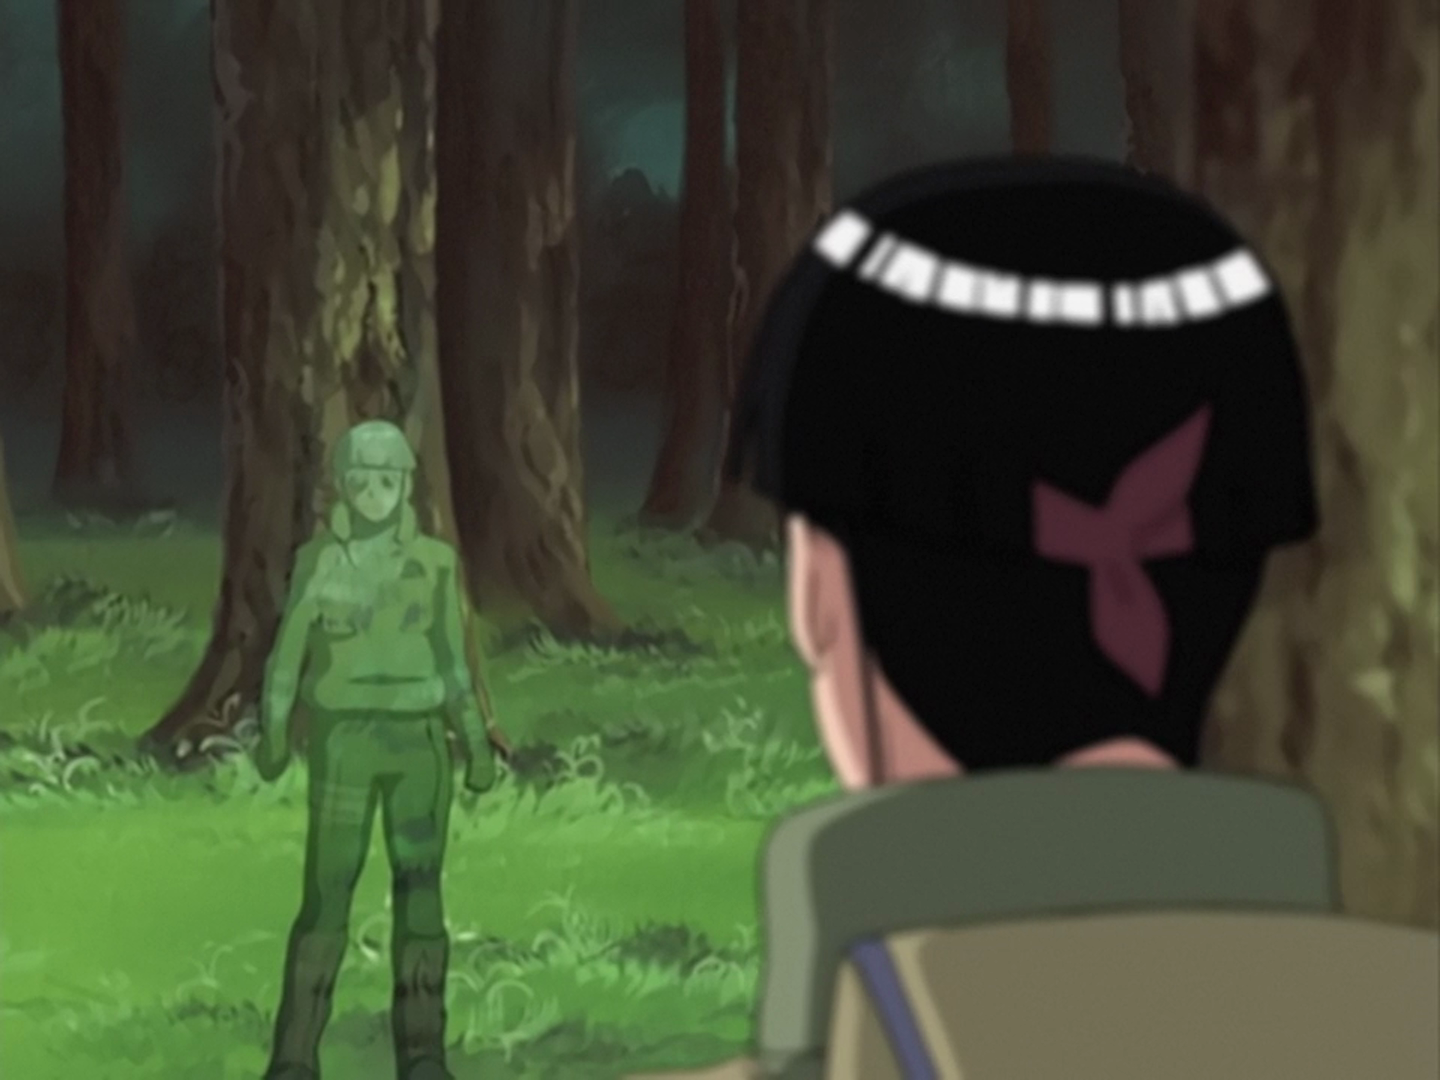 Watch Naruto Shippuden Episode 19 Online - Traps Activate! Team Guy's Enemy